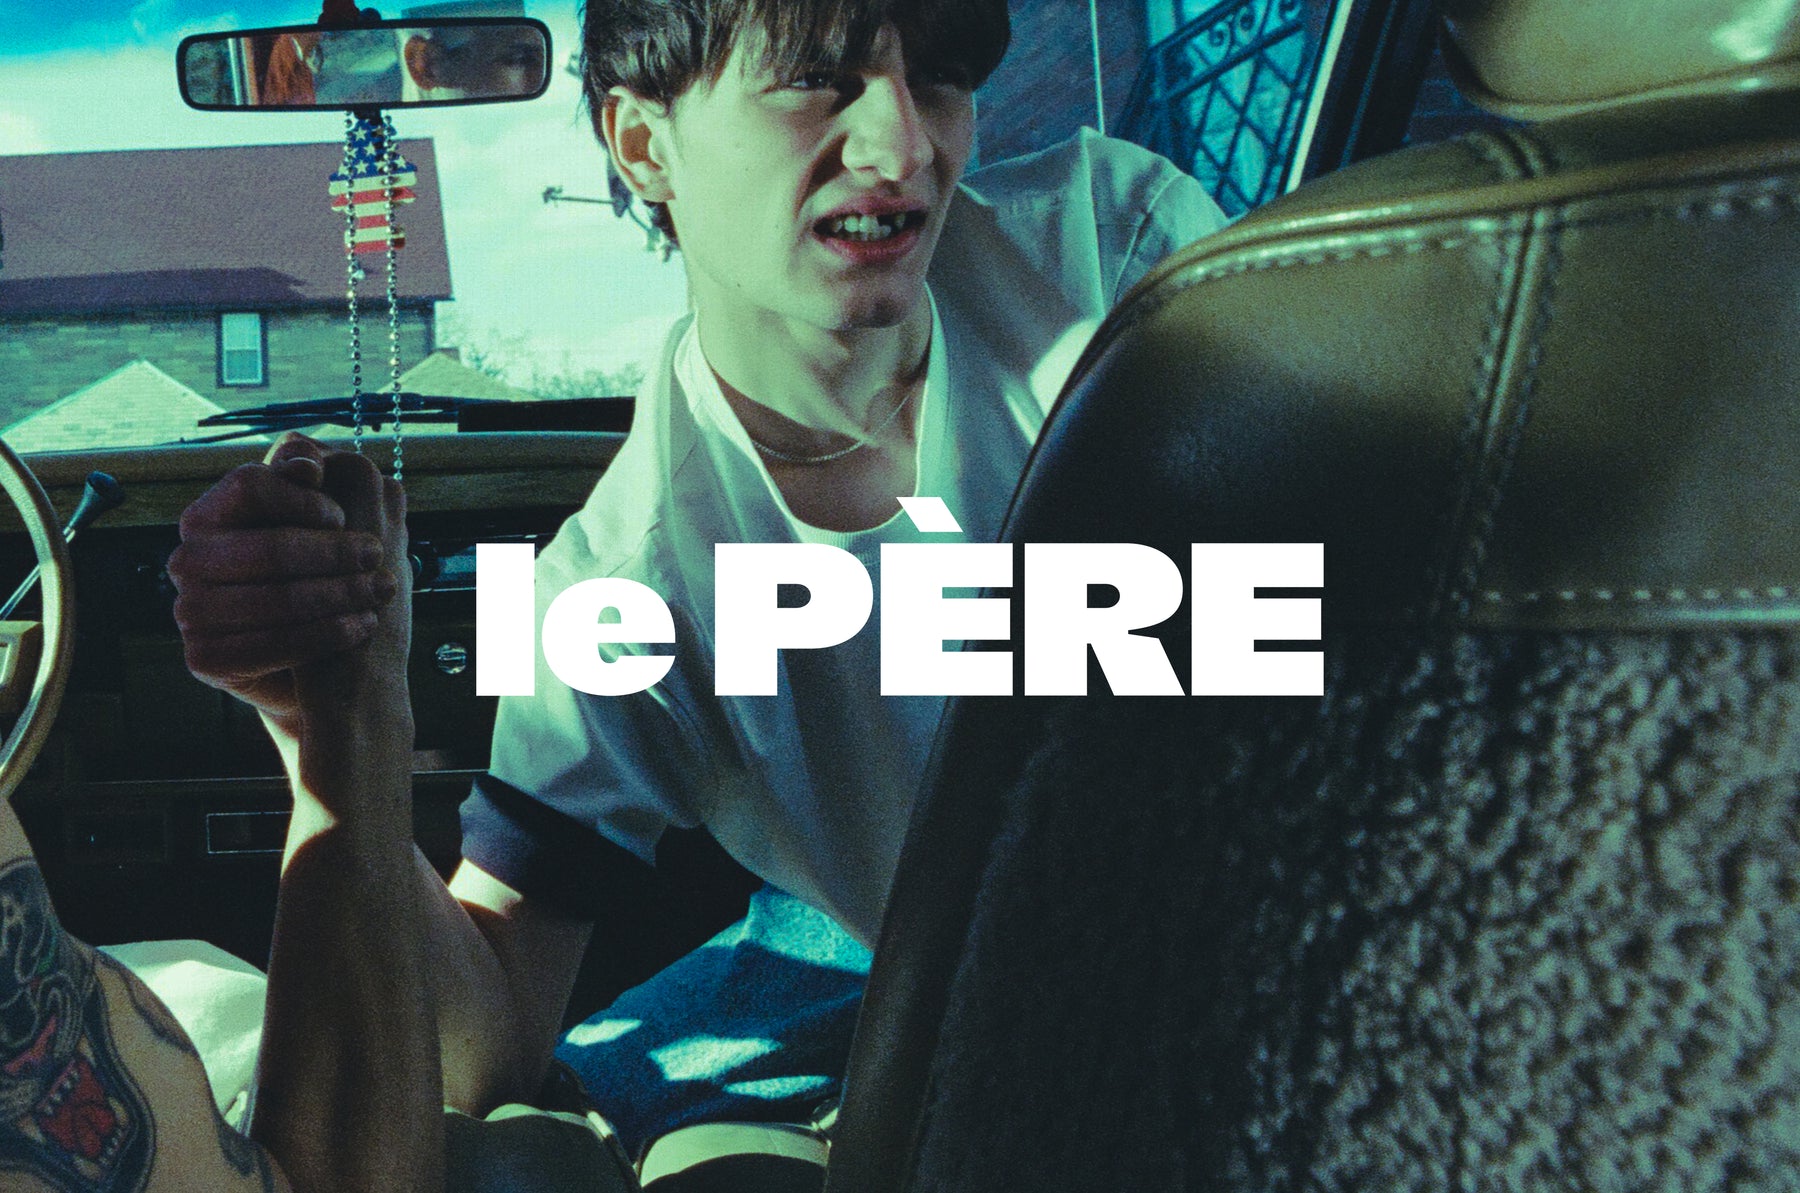 le PÈRE: IN THE PRESS